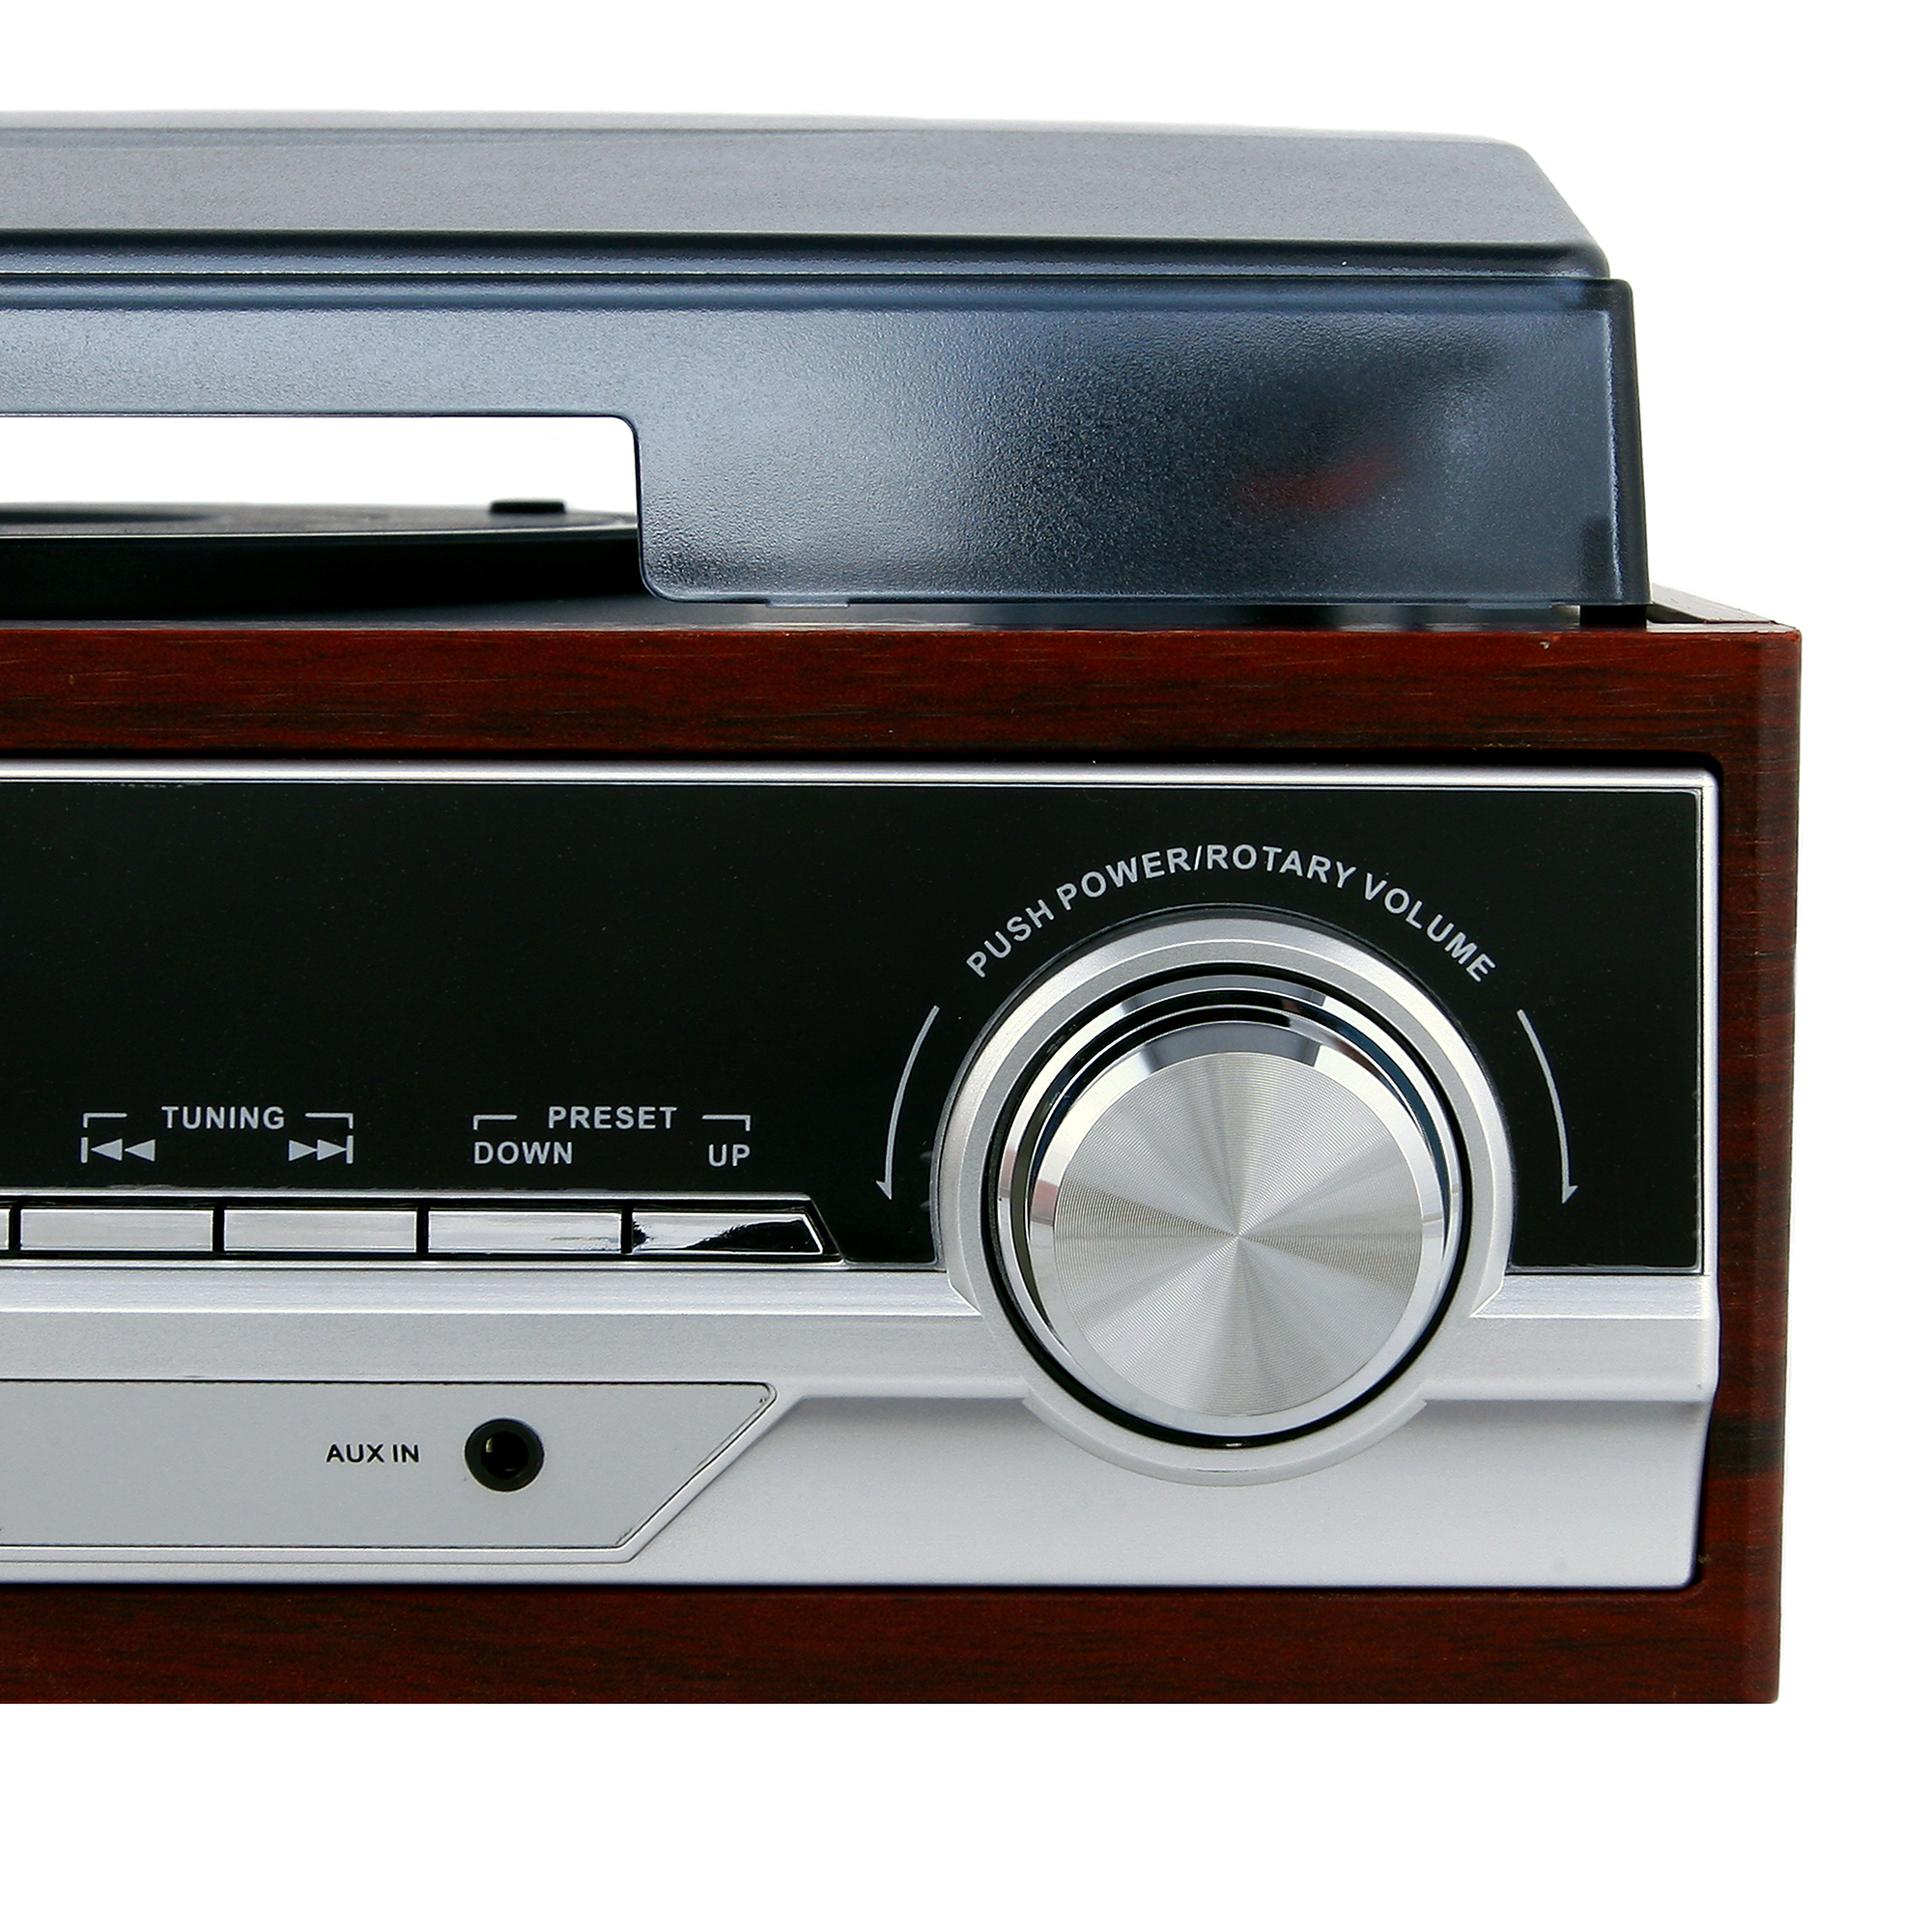 CAMRY CR1113 Tocadiscos Retro 33-45-78 RPM, Radio AM-FM, Estéreo, Despertador, Estilo Vintage, AUX 3,5 mm, Despertador, Pantalla LCD